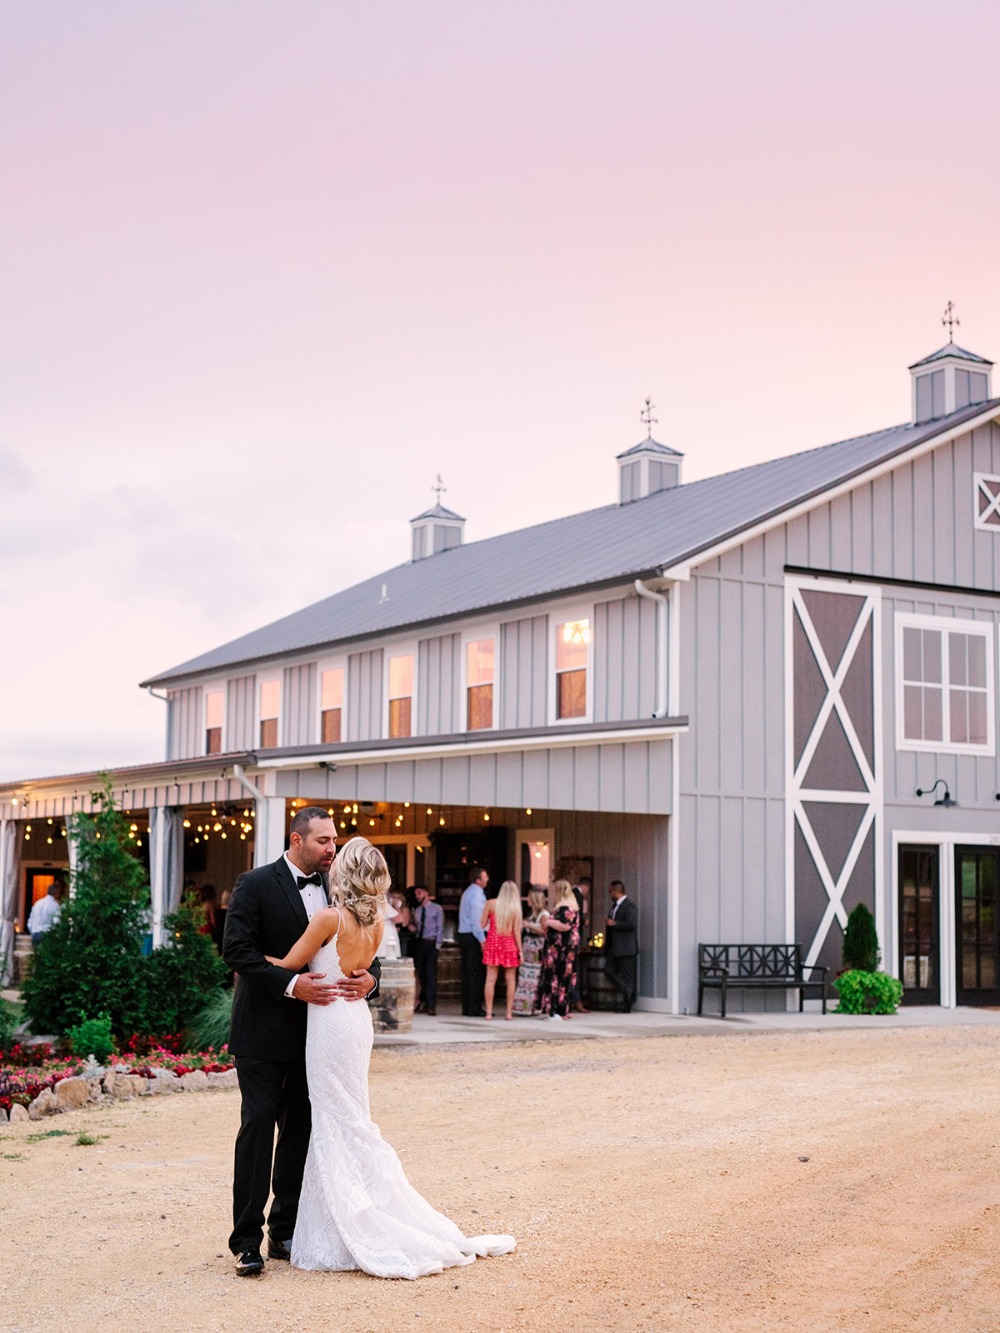 elegant barn wedding day at sunset